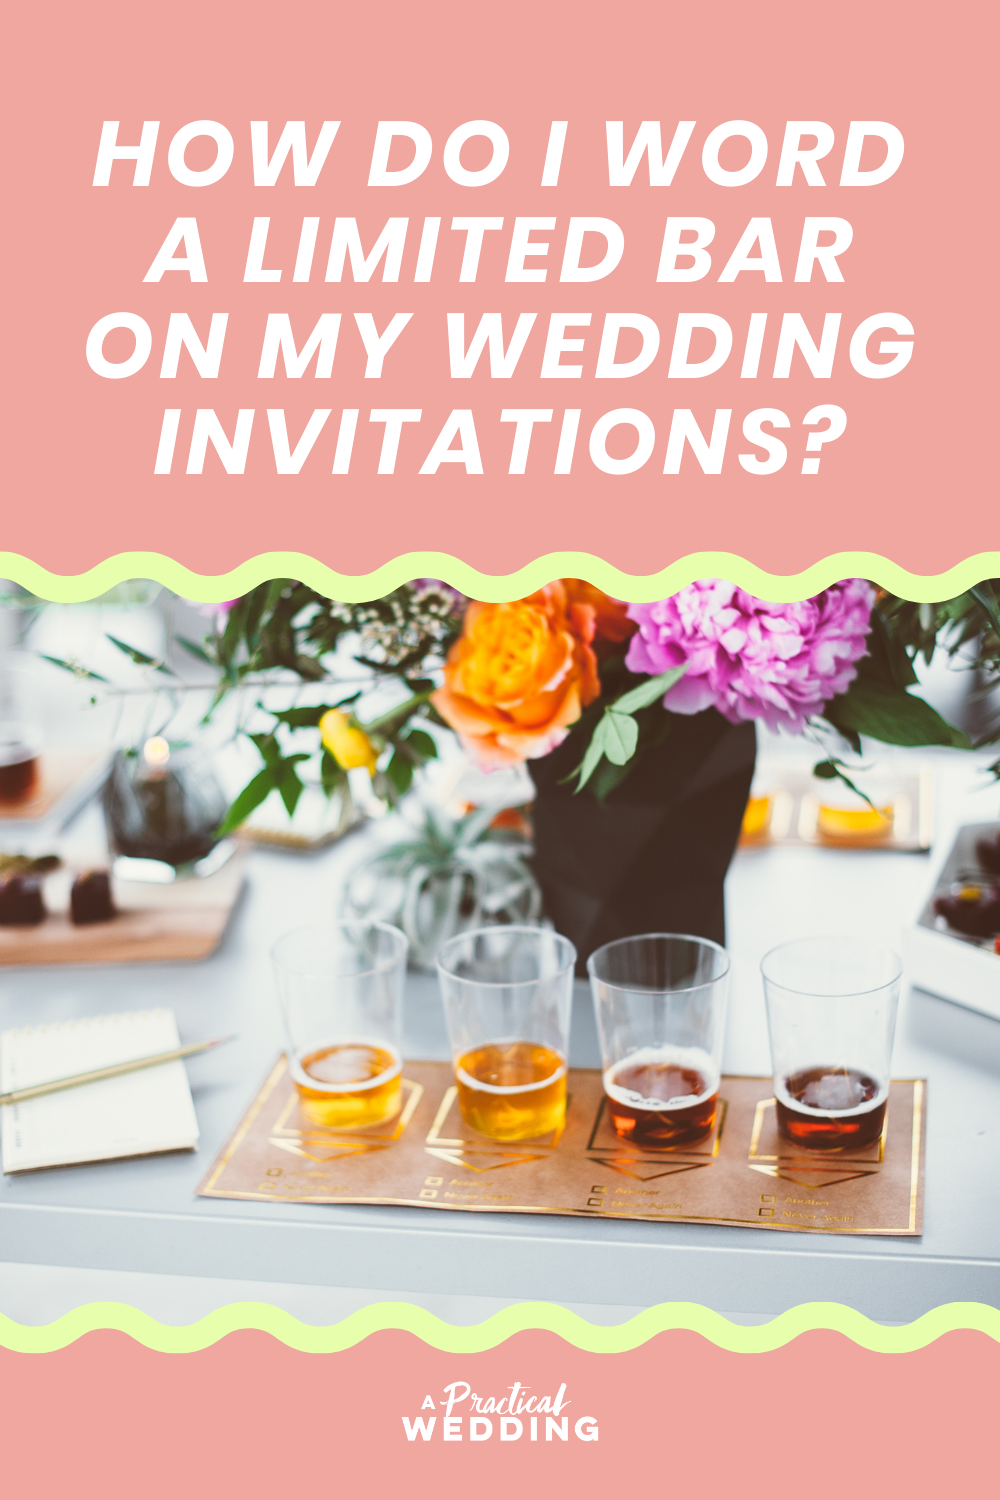 How Do I Word a Limited Bar on My Wedding Invitations?